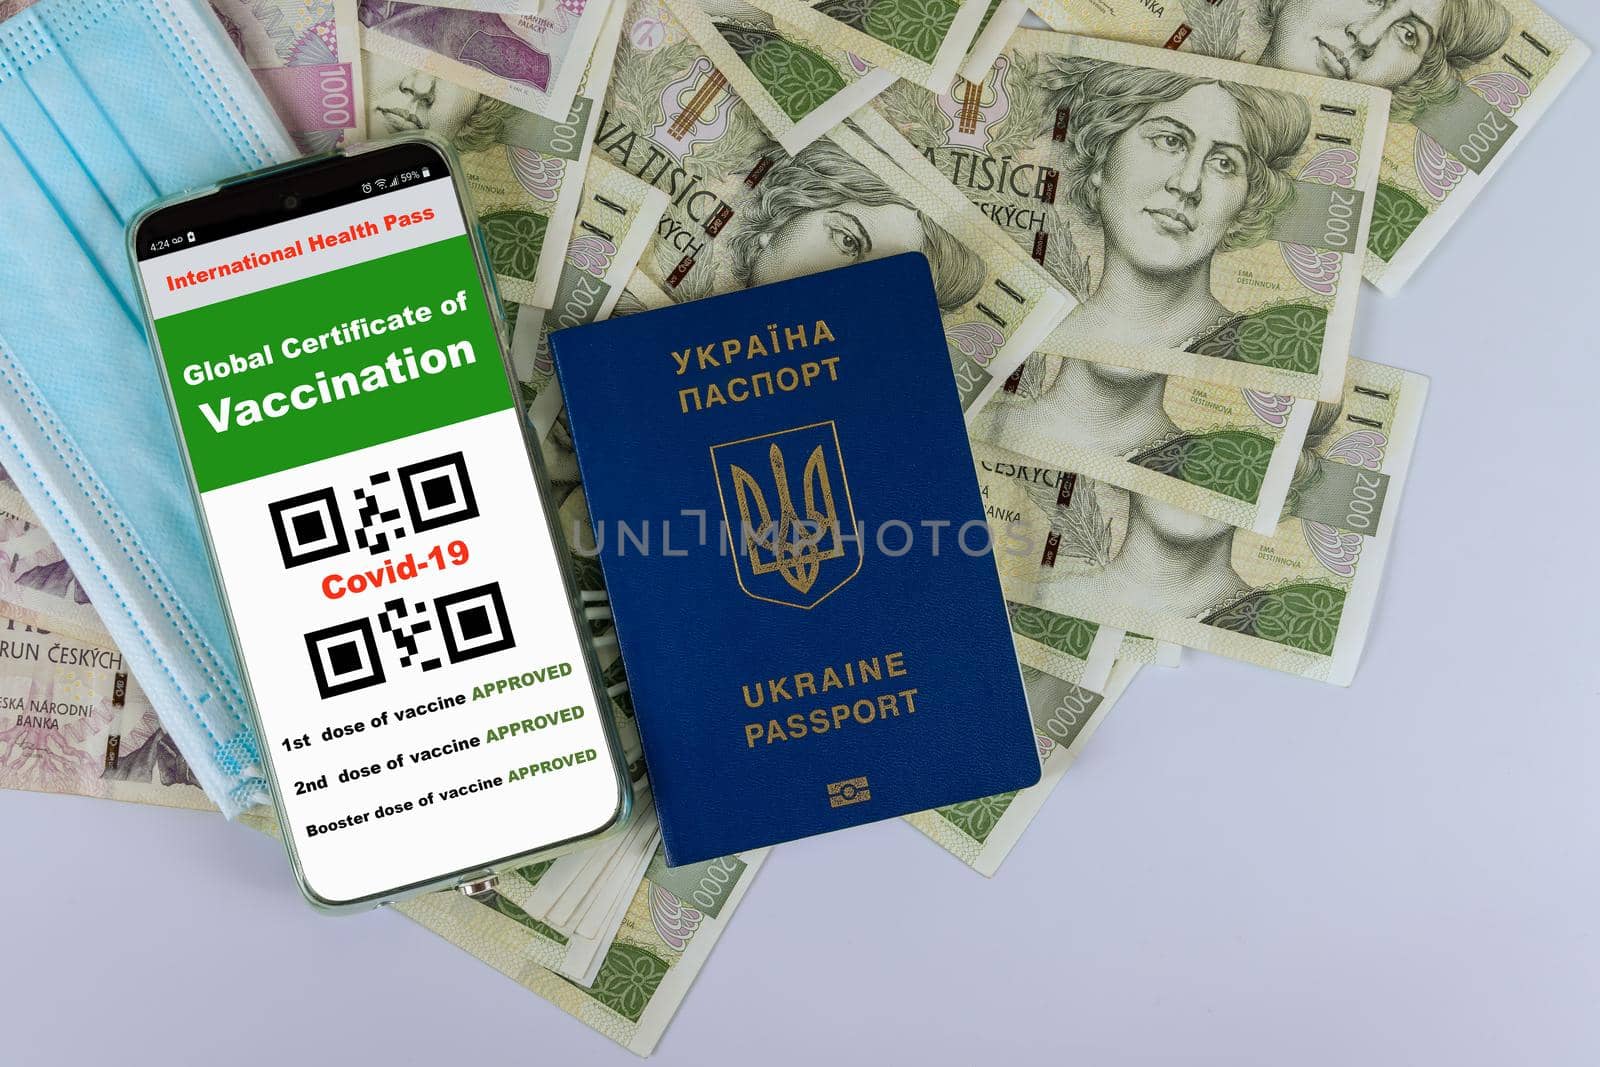 Travel to the Czech with a smartphone digital Covid-19 health passport and Ukraine passport, ceska koruna by ungvar